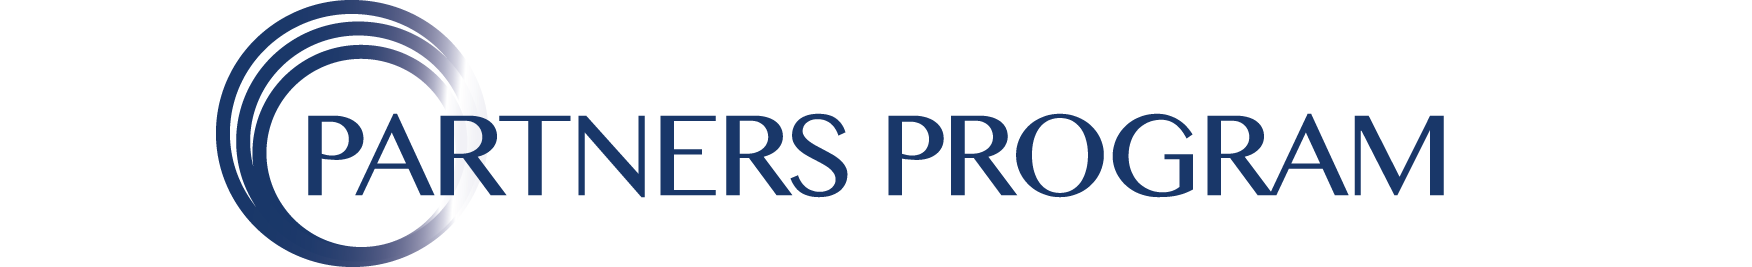 partners logo BLUE